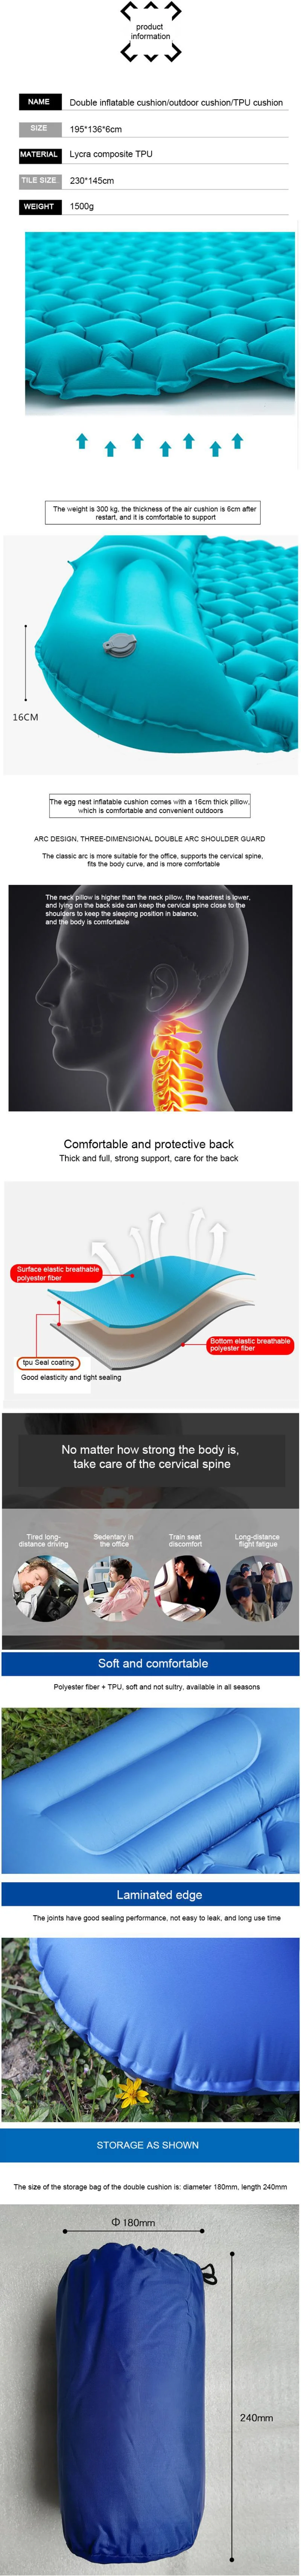 Double Inflatable Cushion/Outdoor Cushion/TPU Inflatable Cushion